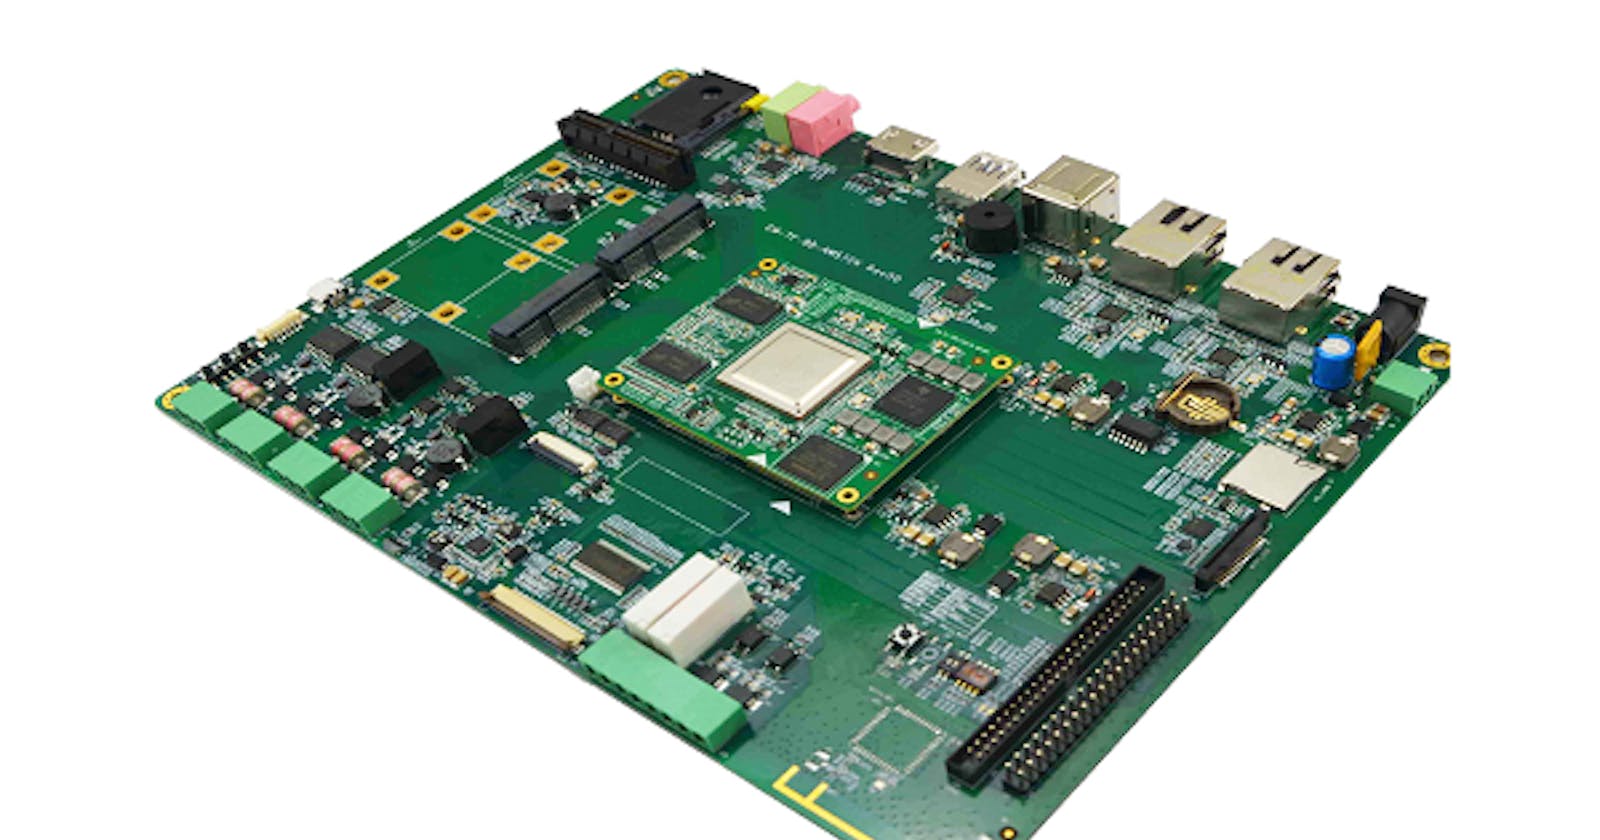 FPGA+DSP+ARM industrial board-Texas Instruments AM57xx 1.5 GHz Dual Cortex-A15 ARM, 750 MHz C66x DSP, and Xilinx Artix-7